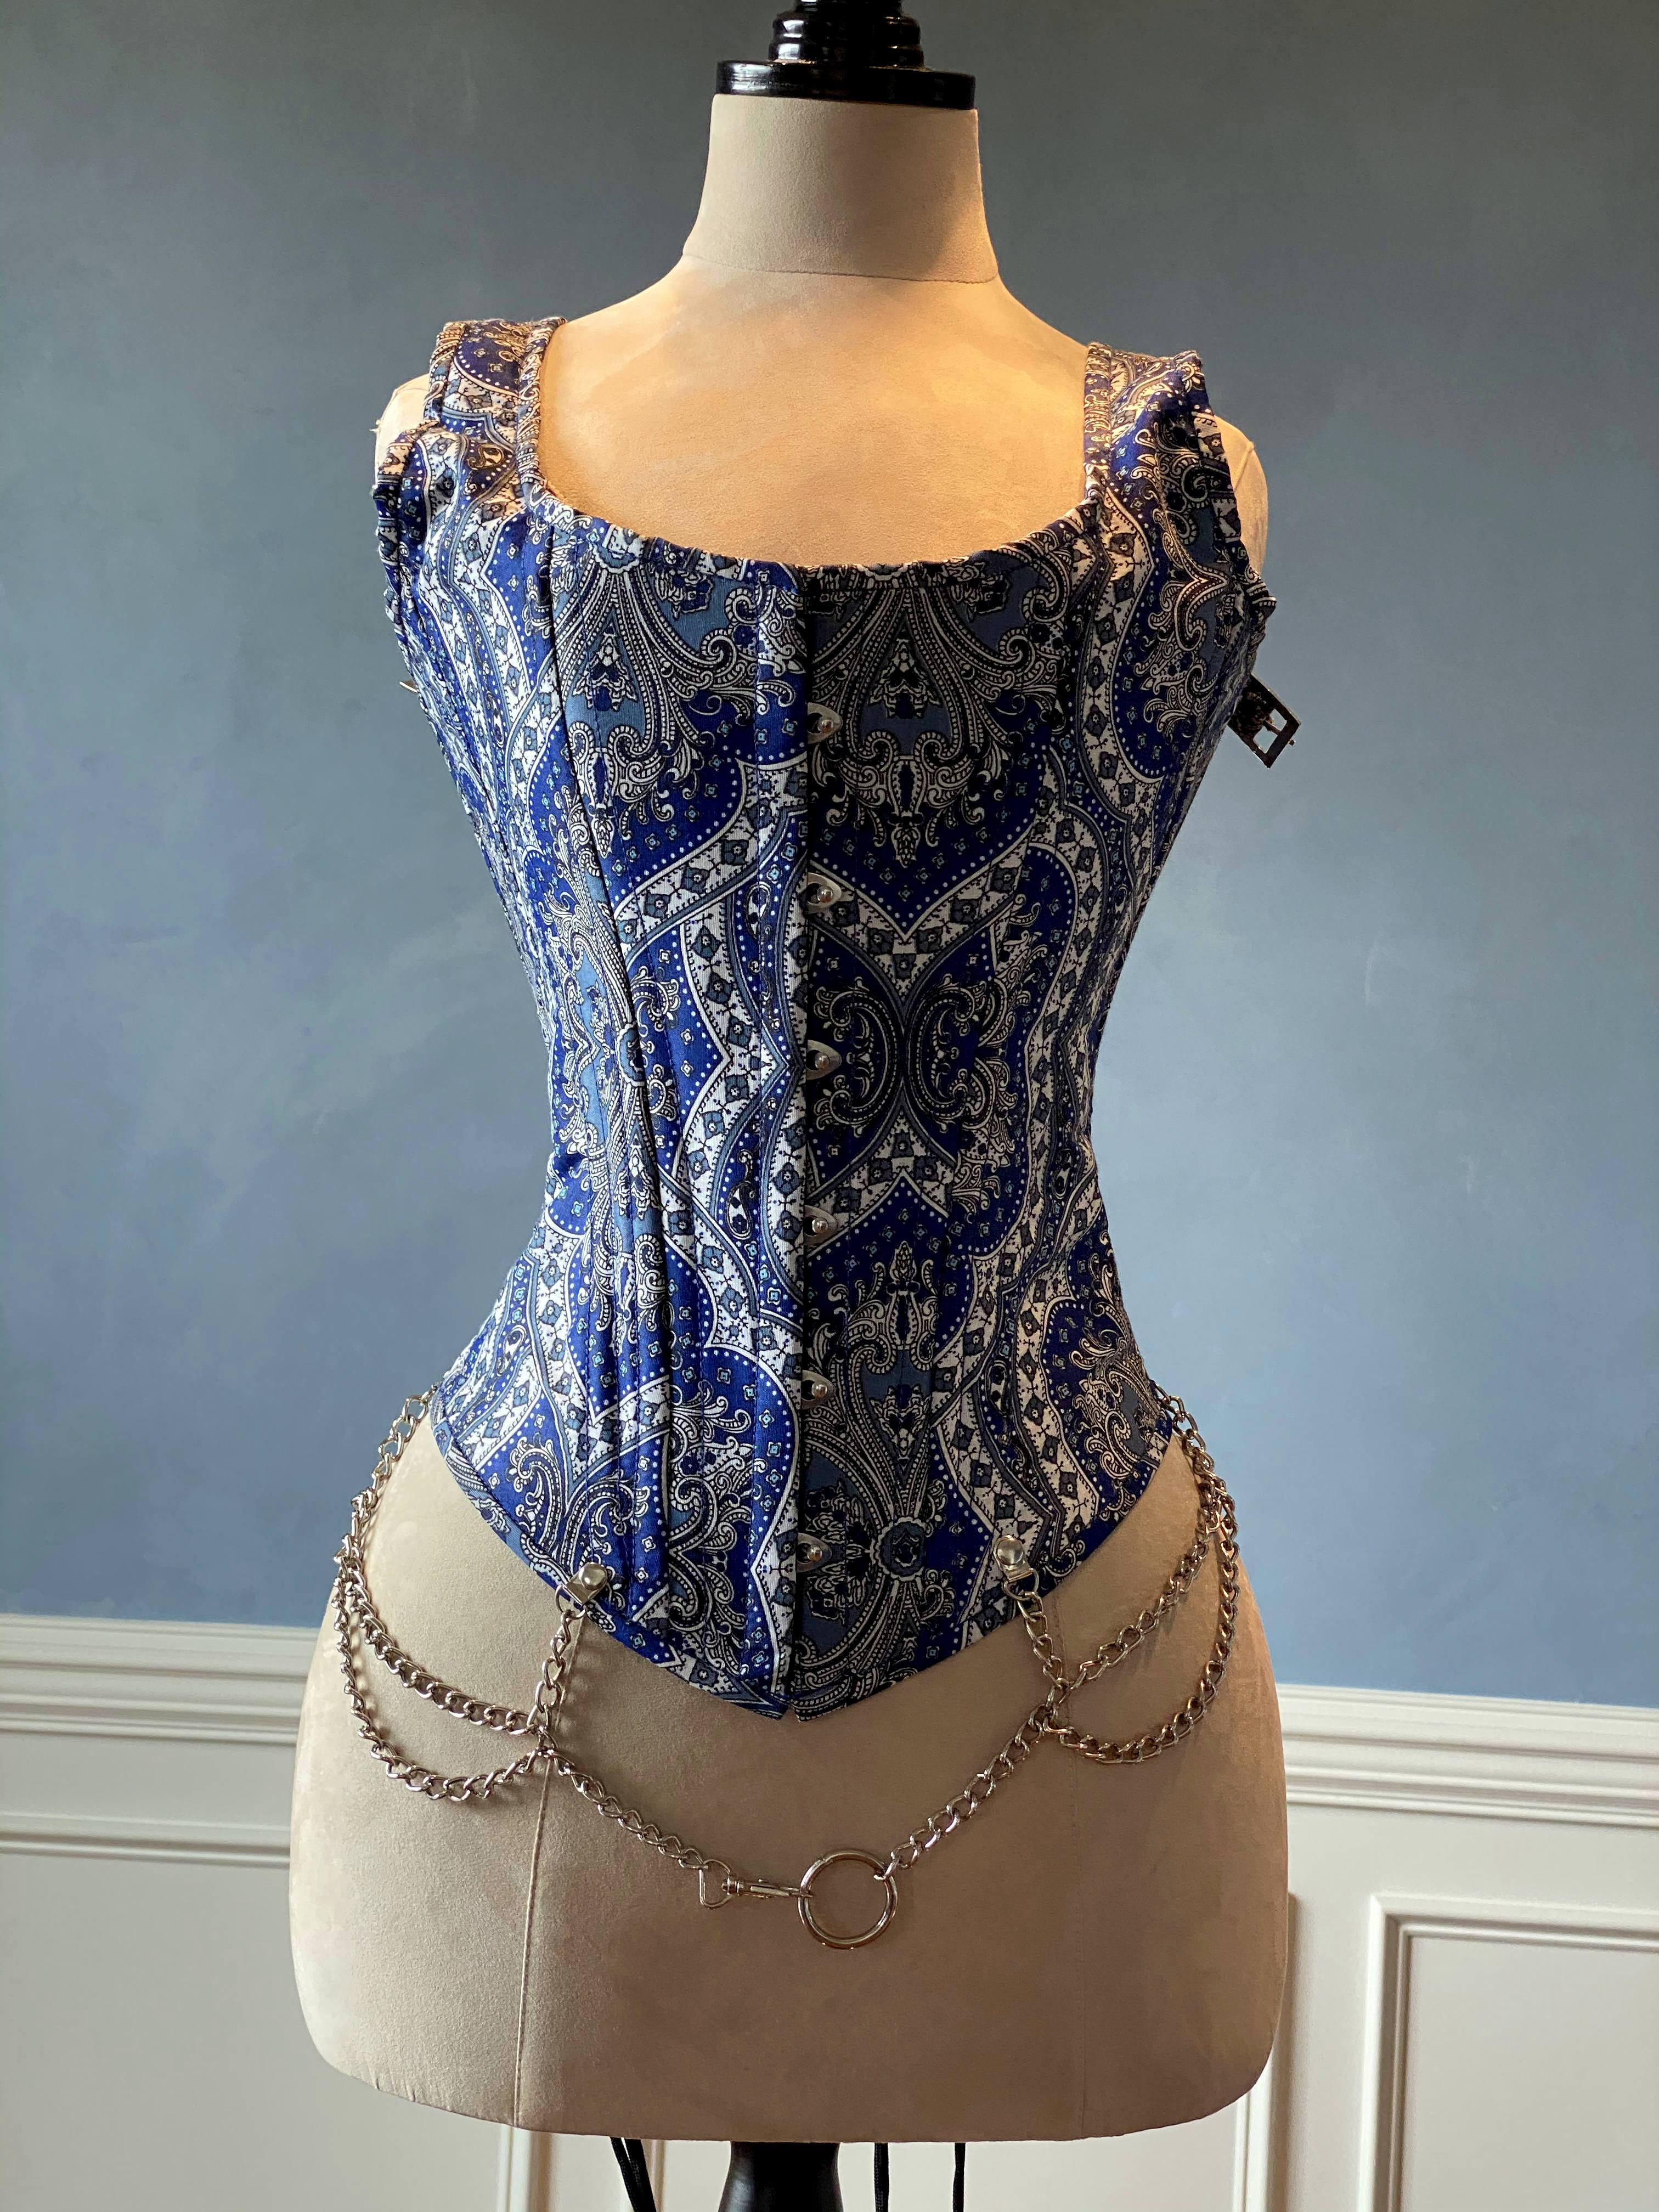 Classic brocade overbust corset vest inspired by Audrey Hepburn with  shoulder straps. Steel-boned corset top for tight lacing.